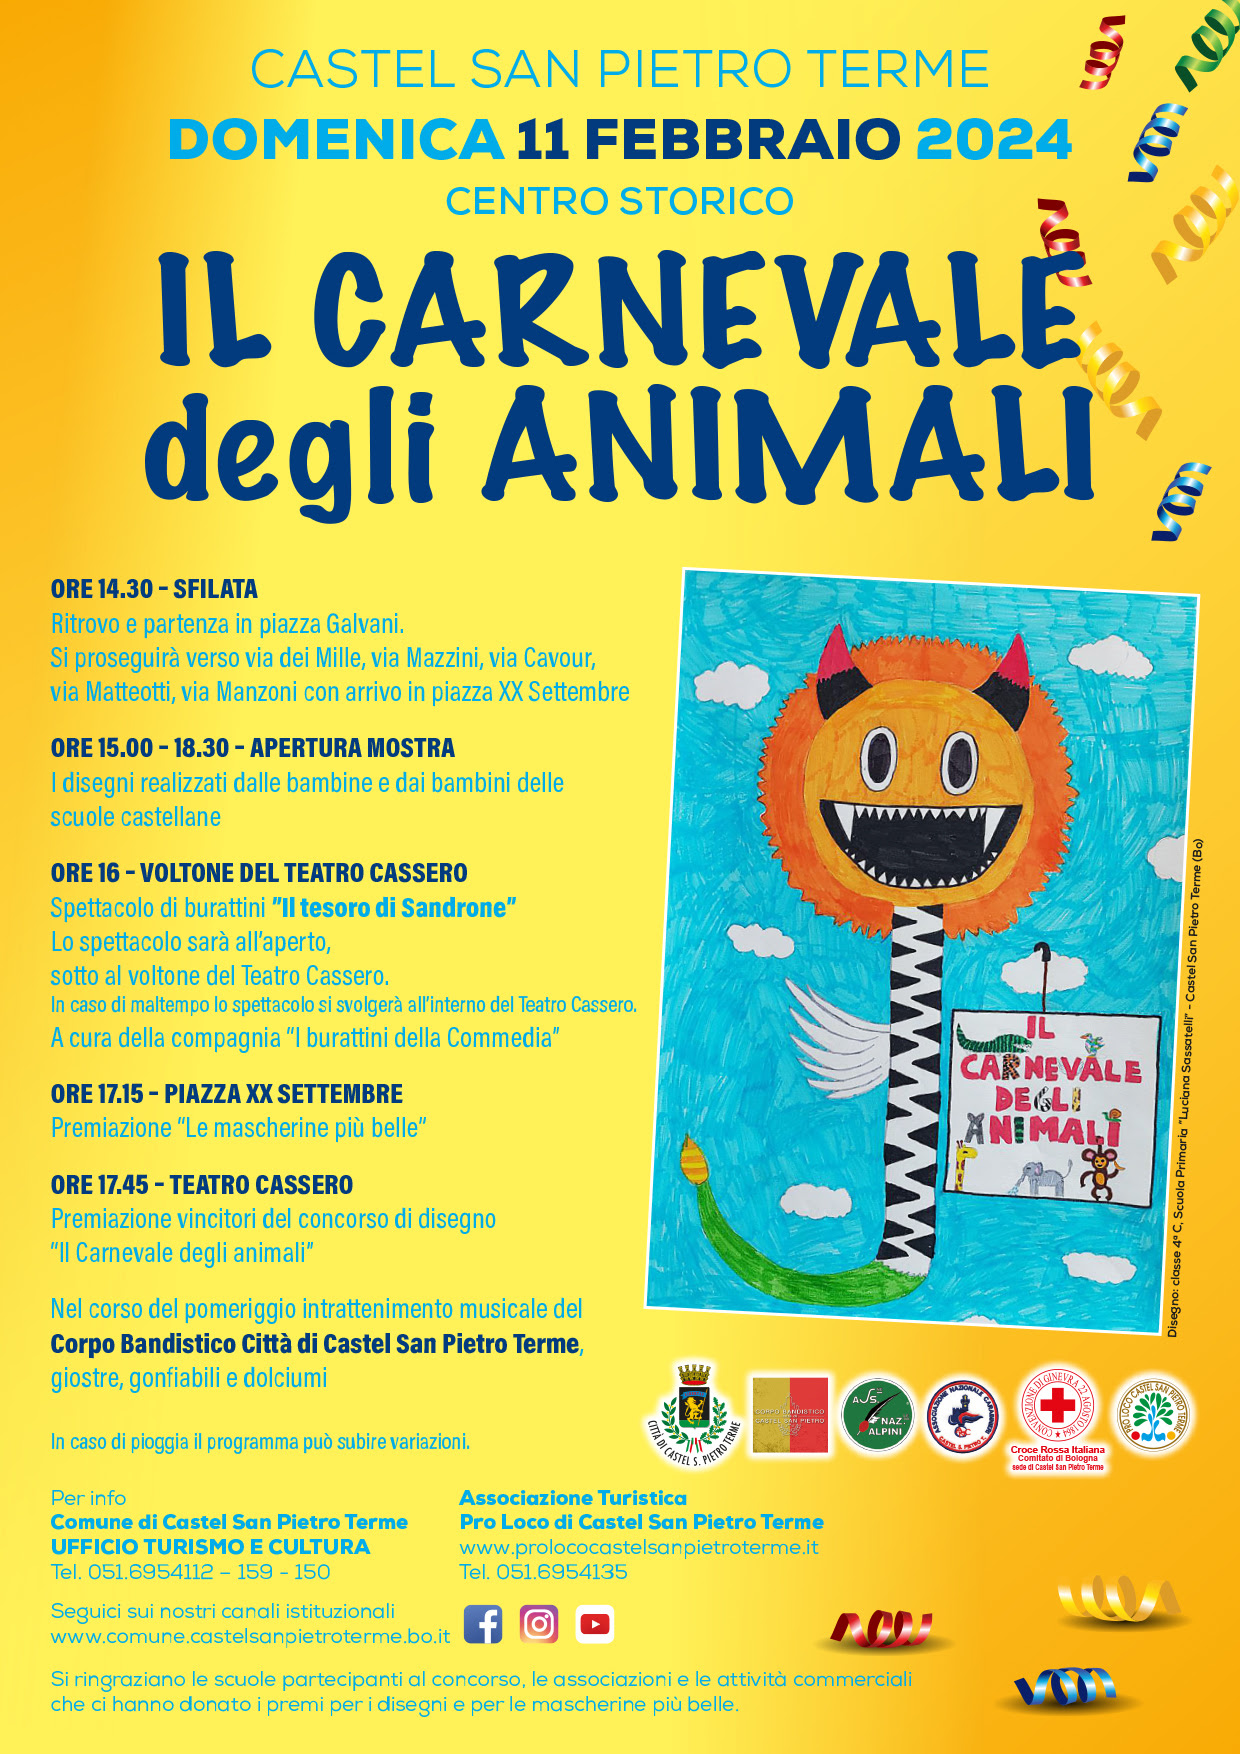 Il Carnevale degli Animali animerà Castel San Pietro Terme